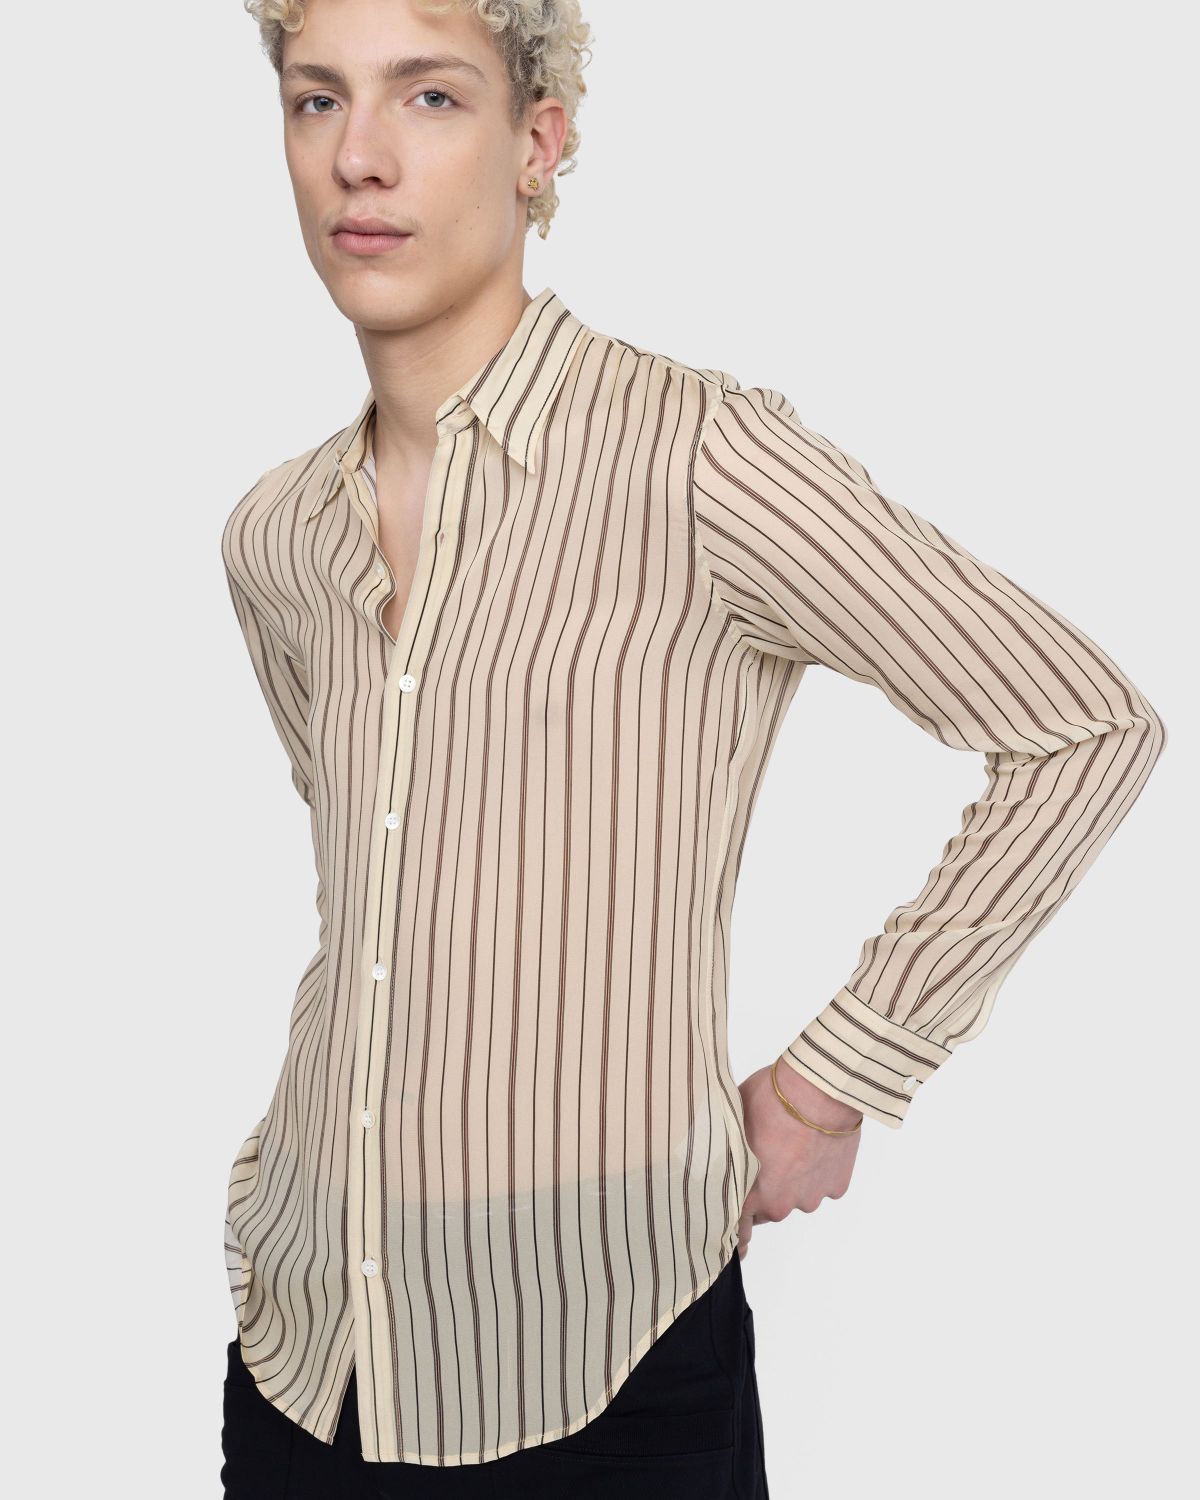 Dries van Noten – Celdon Shirt Ecru - Longsleeve Shirts - Beige - Image 6